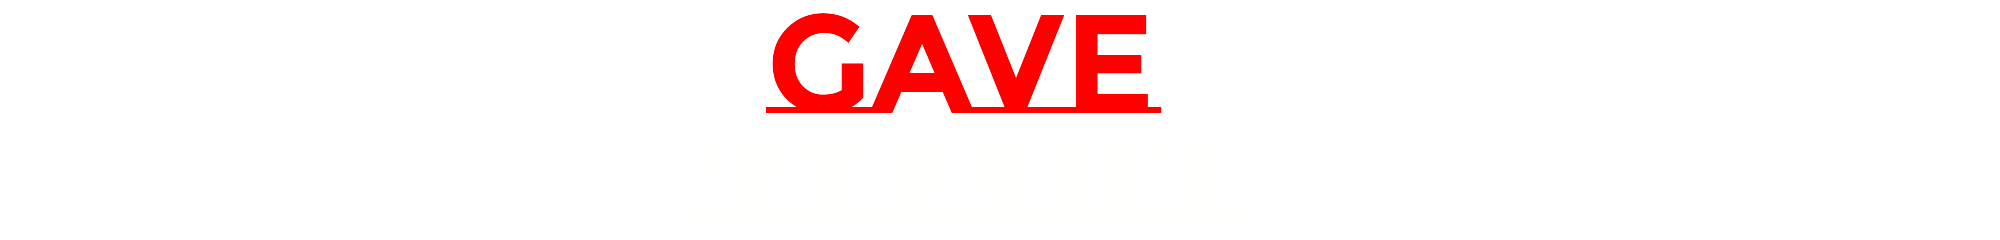 Gave Magazine